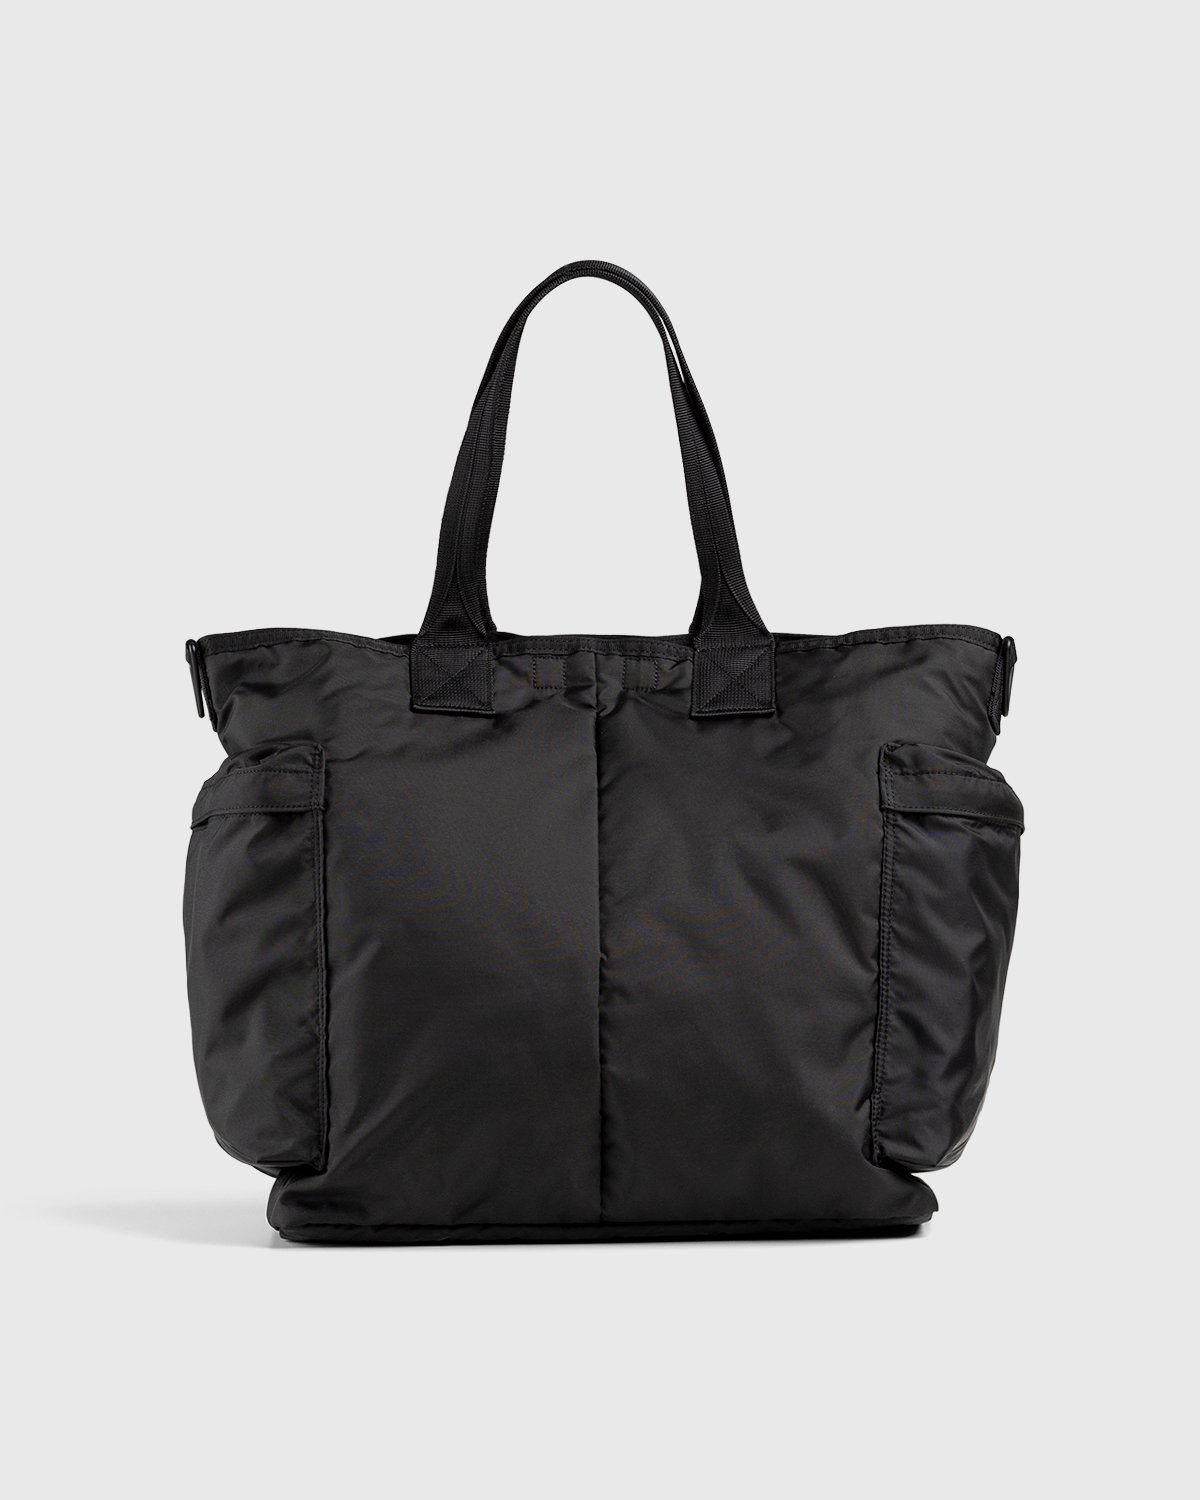 Porter-Yoshida & Co. - 2-Way Tote Bag Black - Accessories - Black - Image 2